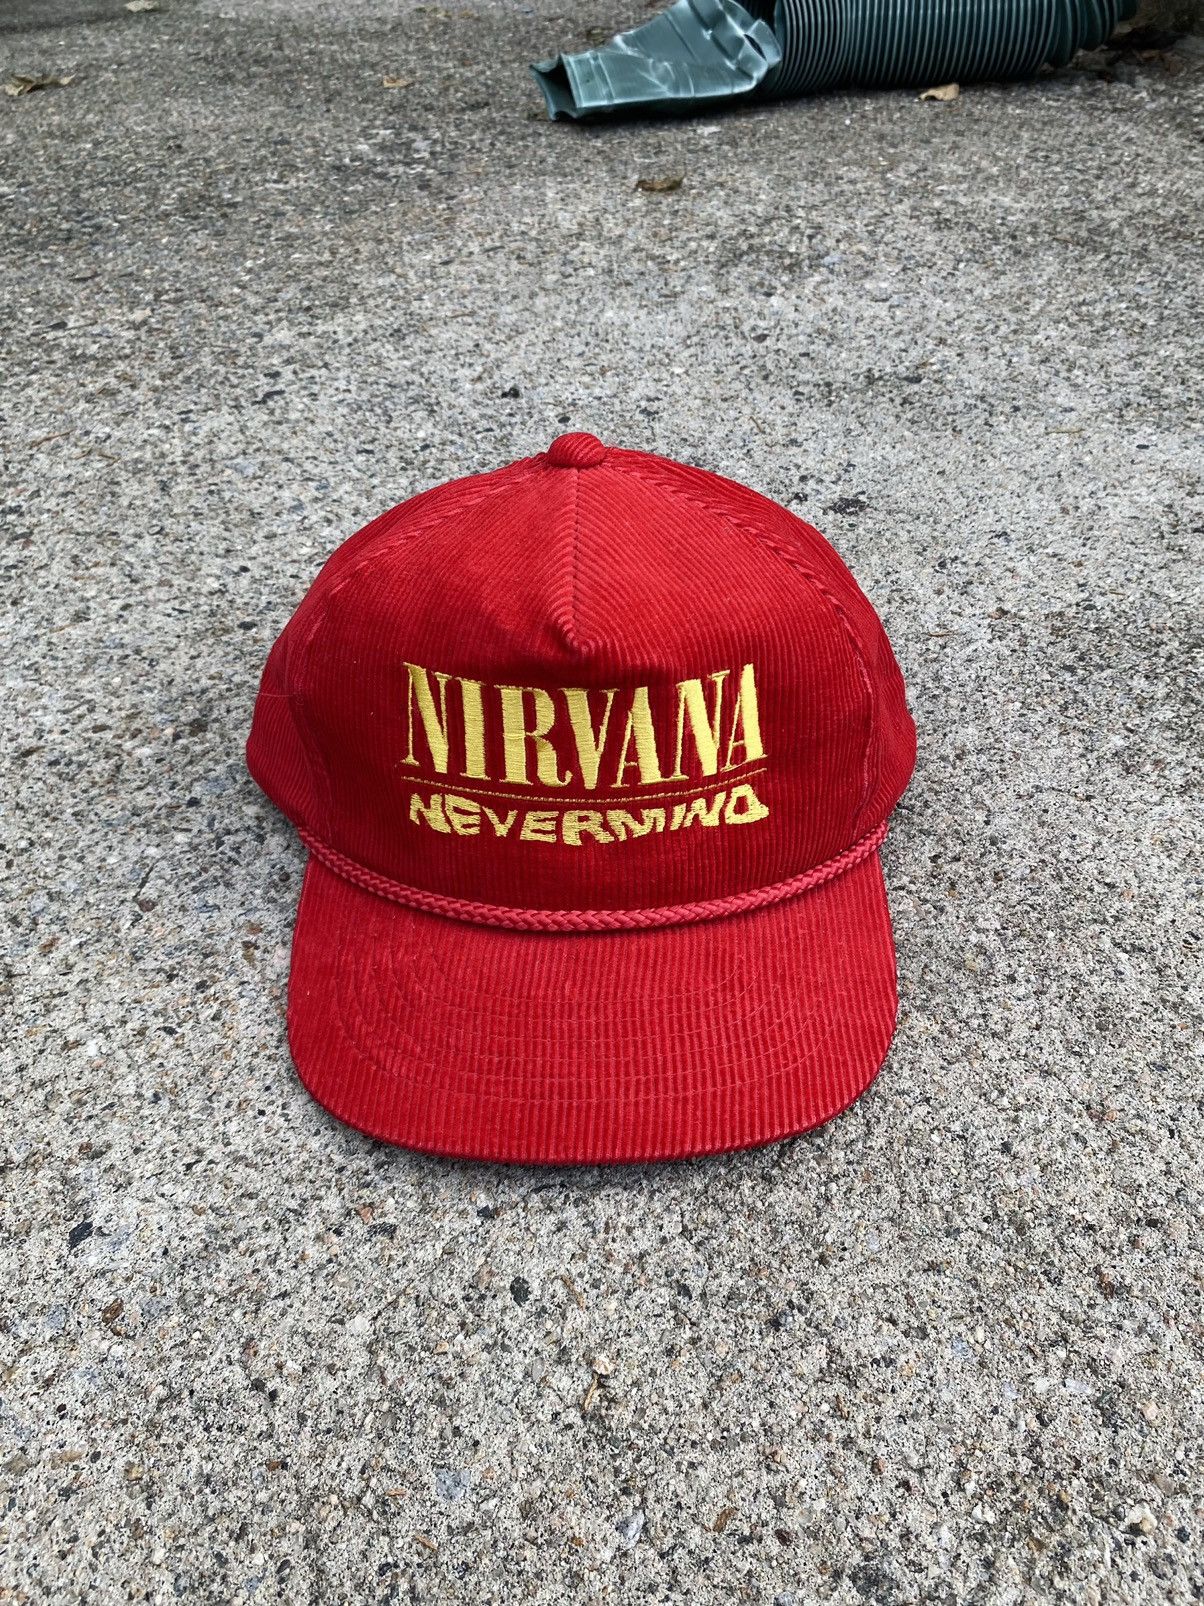 Vintage Vintage 90s Nirvana Nevermind Corduroy Hat | Grailed